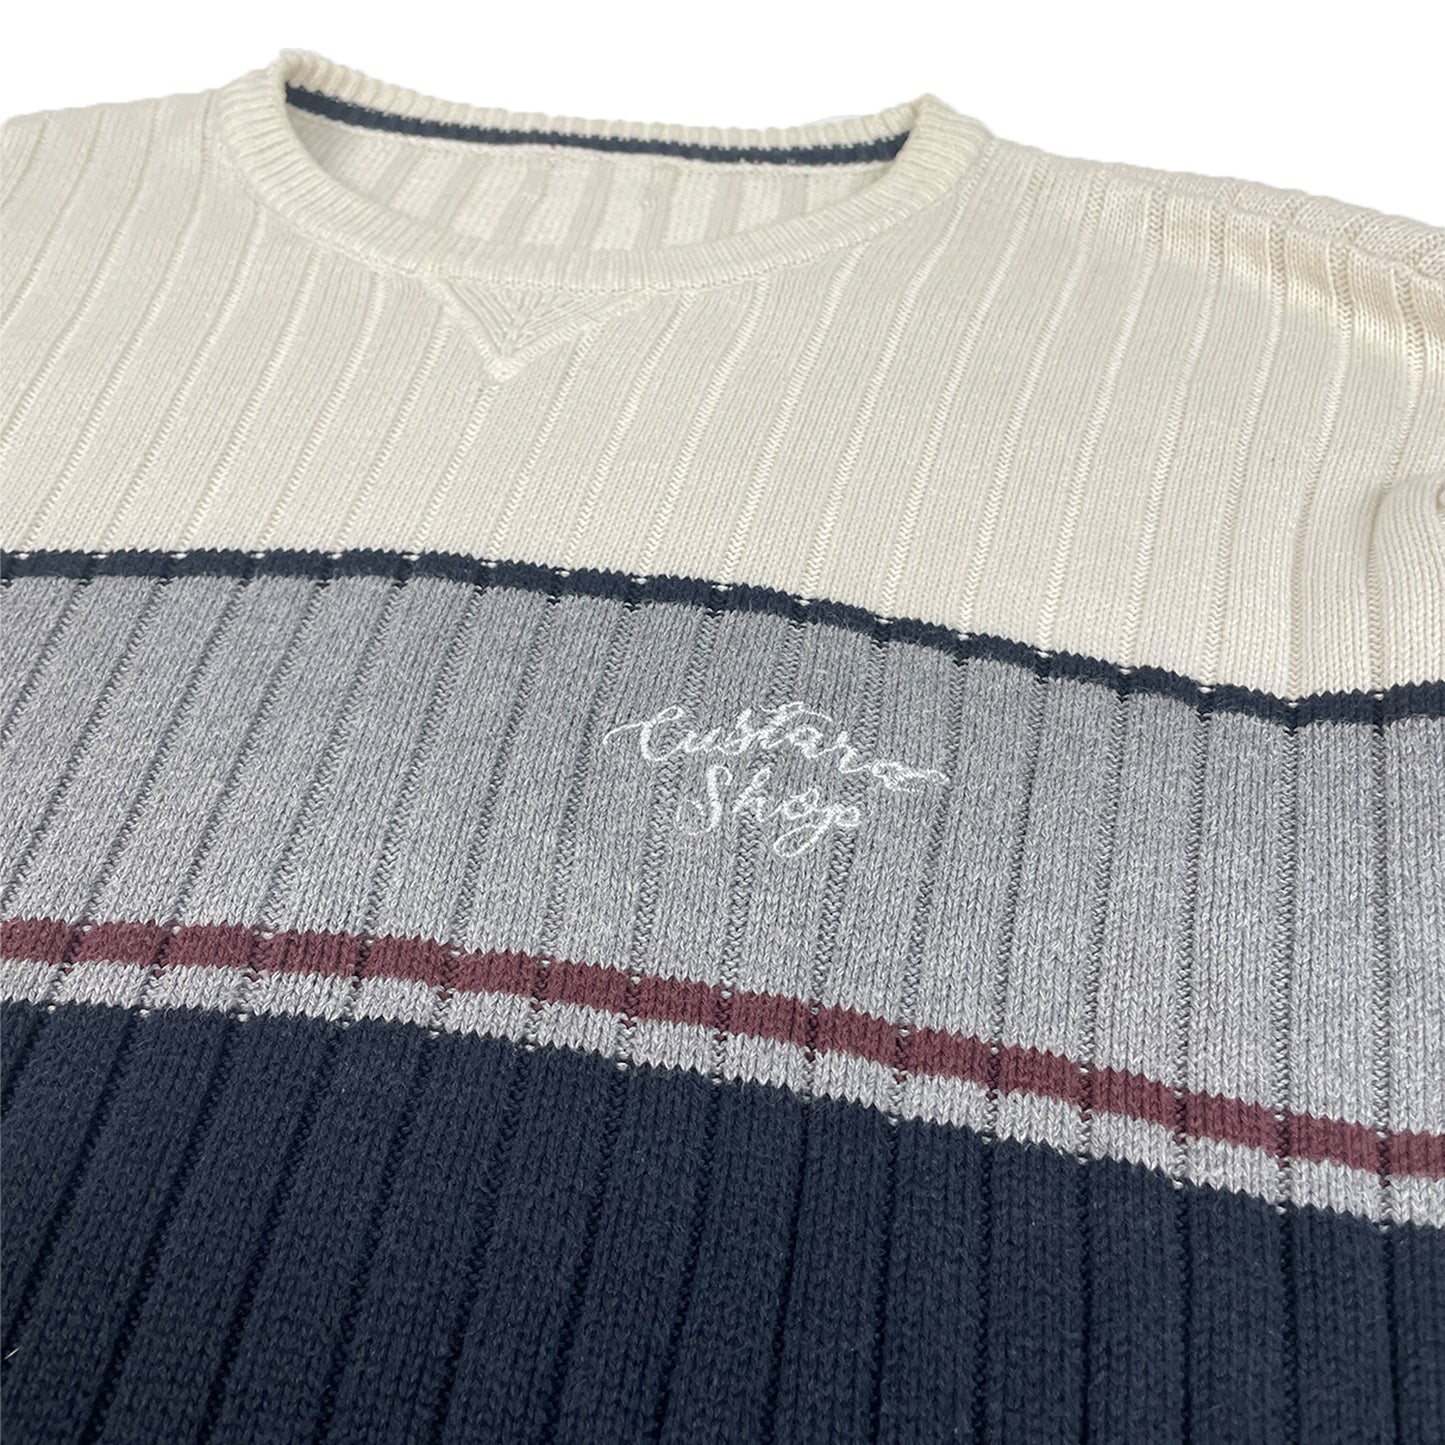 Custard Reclaimed Stripe Sweatshirt | Size Large